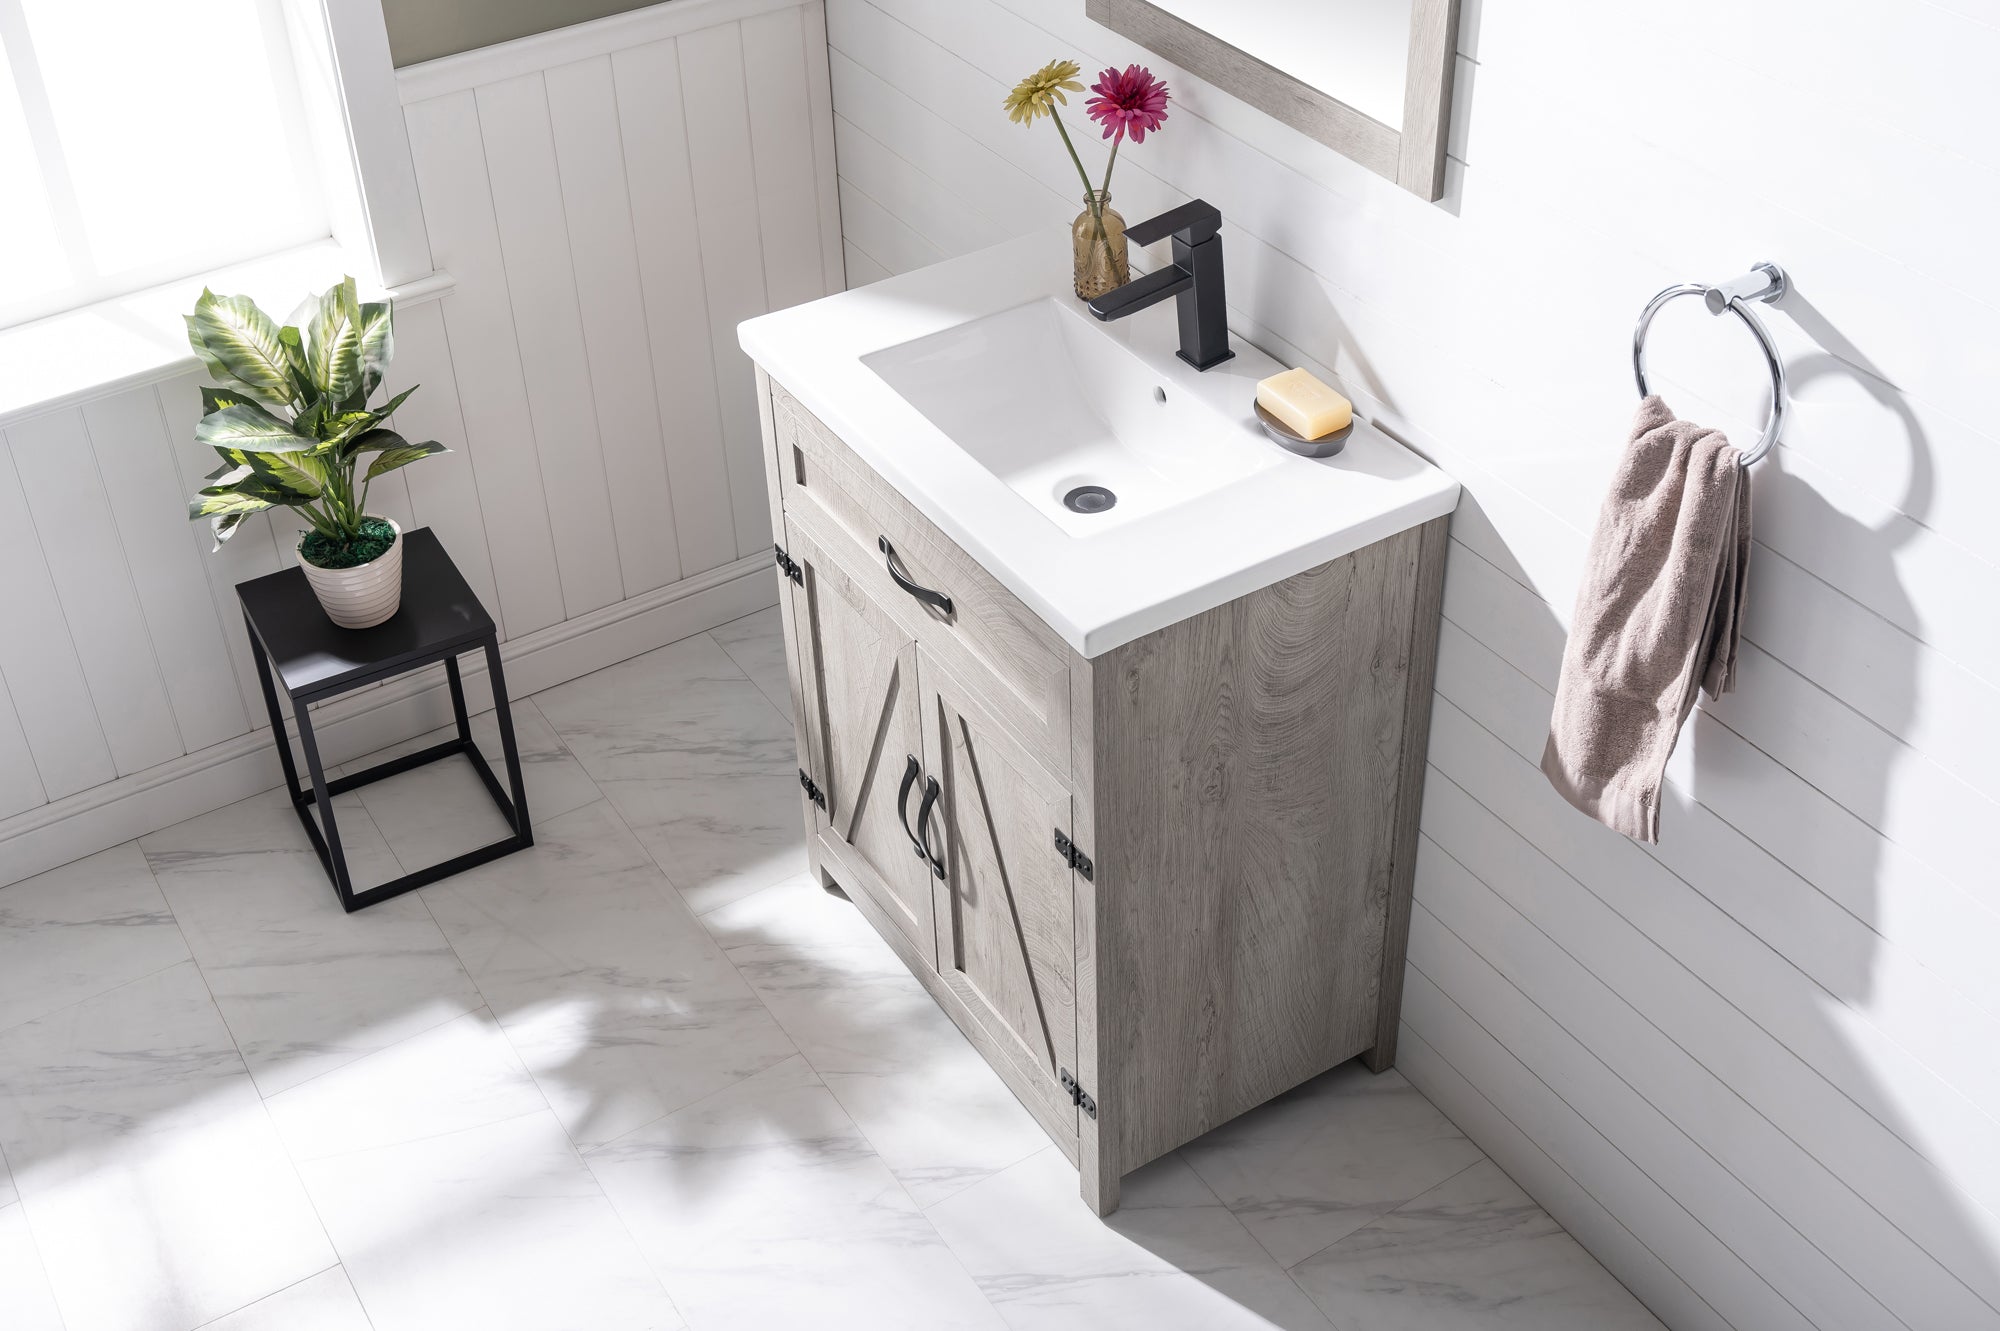 30'' Bathroom Vanity with Sink, Modern Bathroom Cabinet with Towel